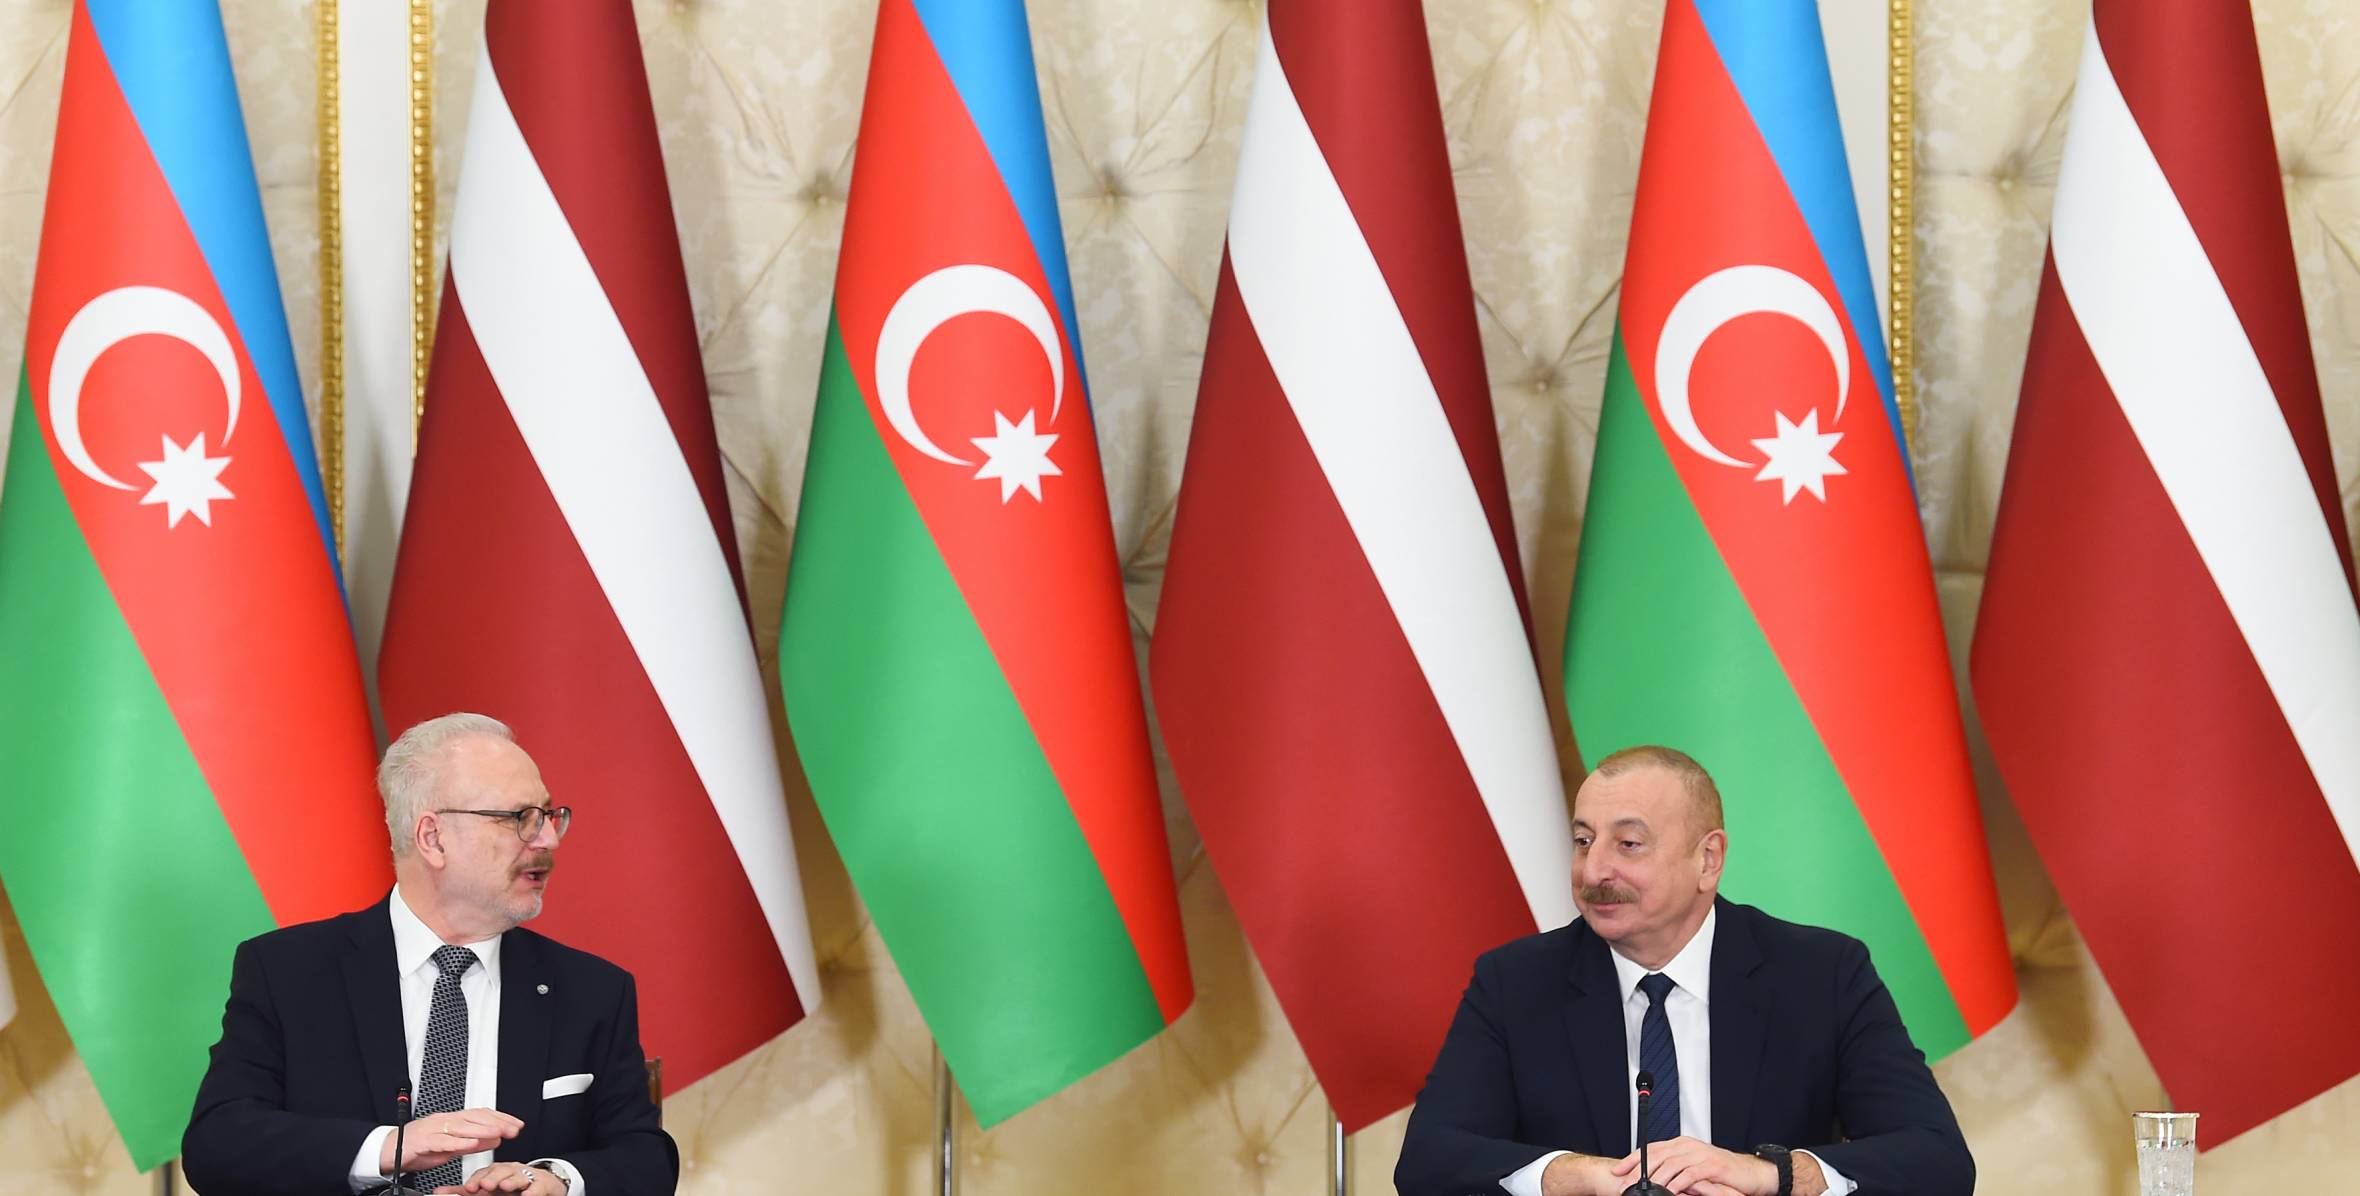 Presidents of Azerbaijan and Latvia made press statements